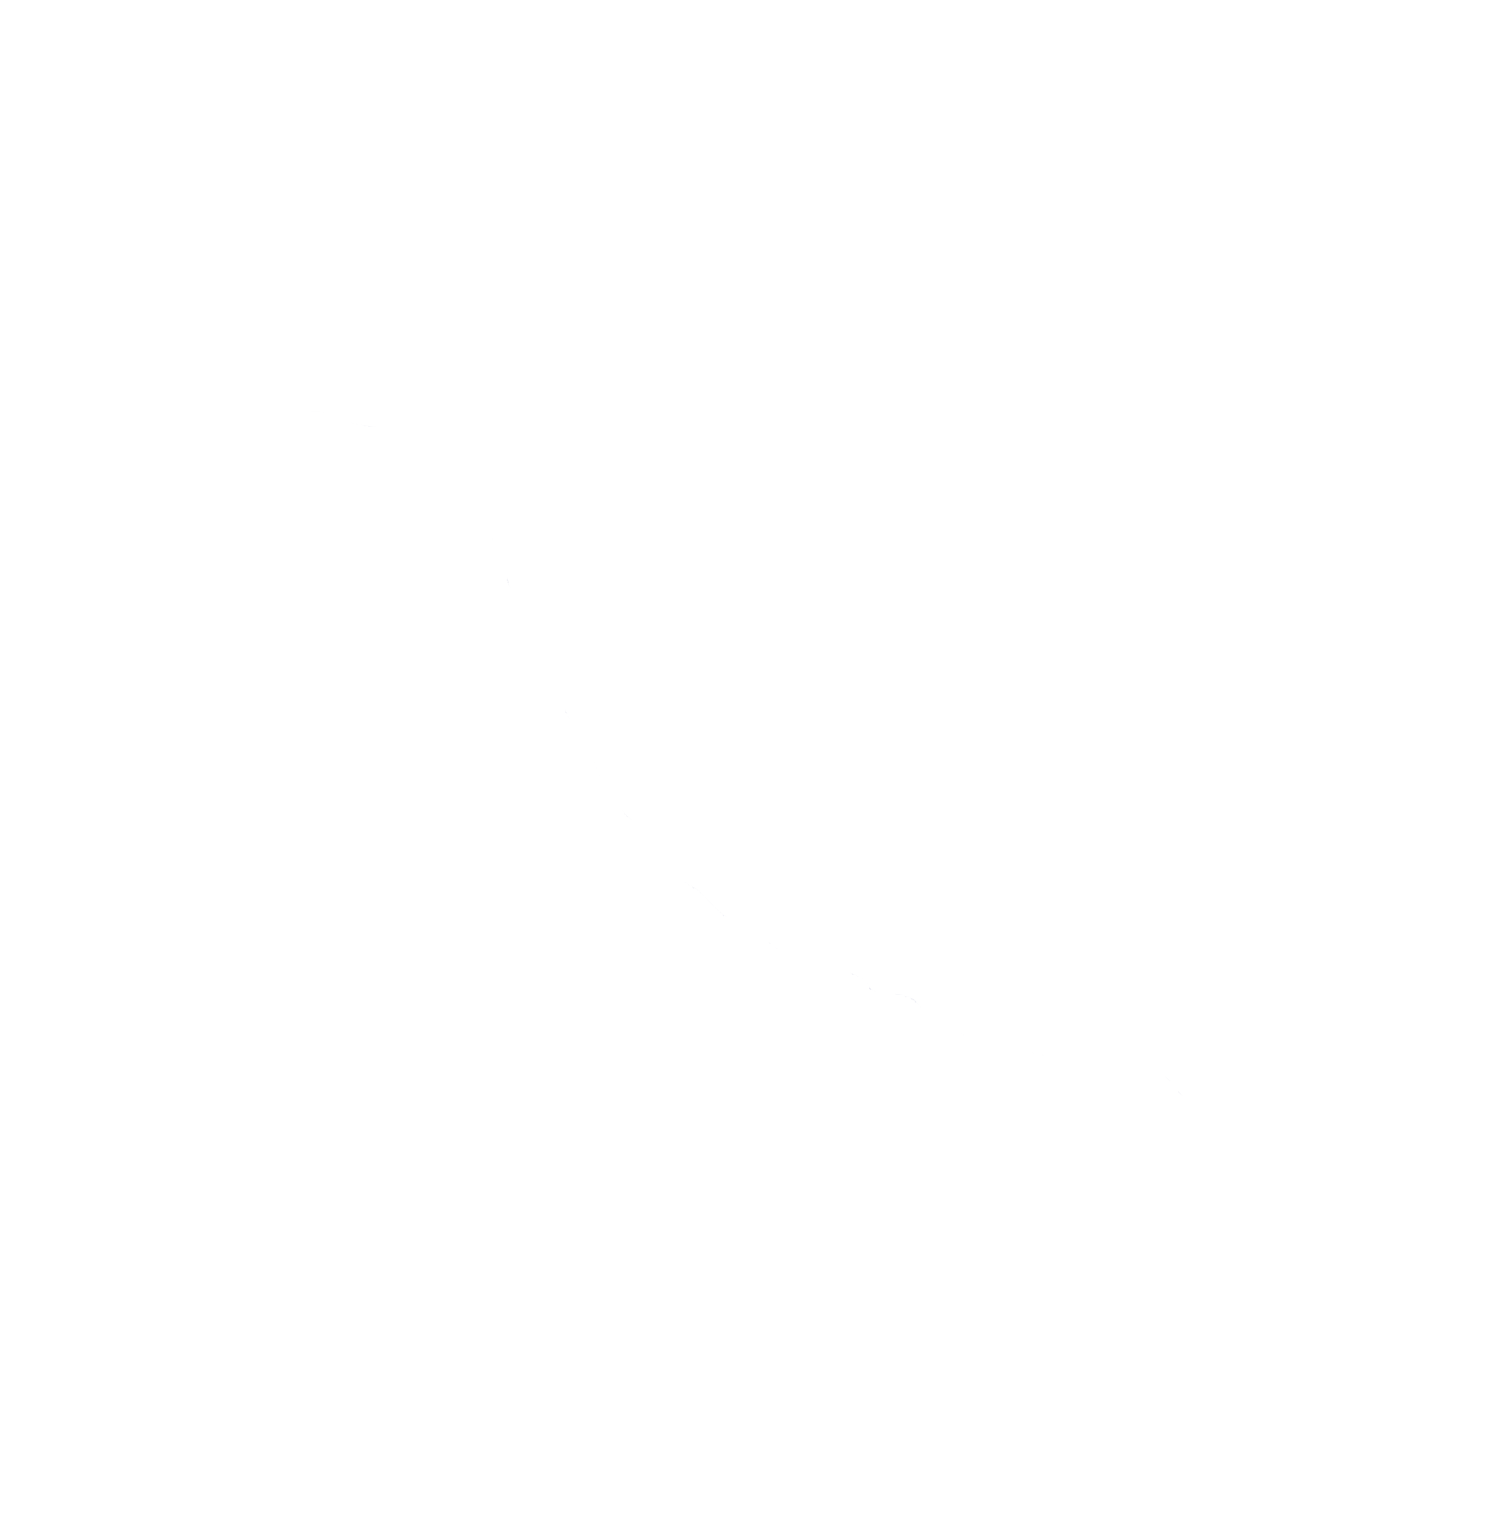 Knysna Heads Association